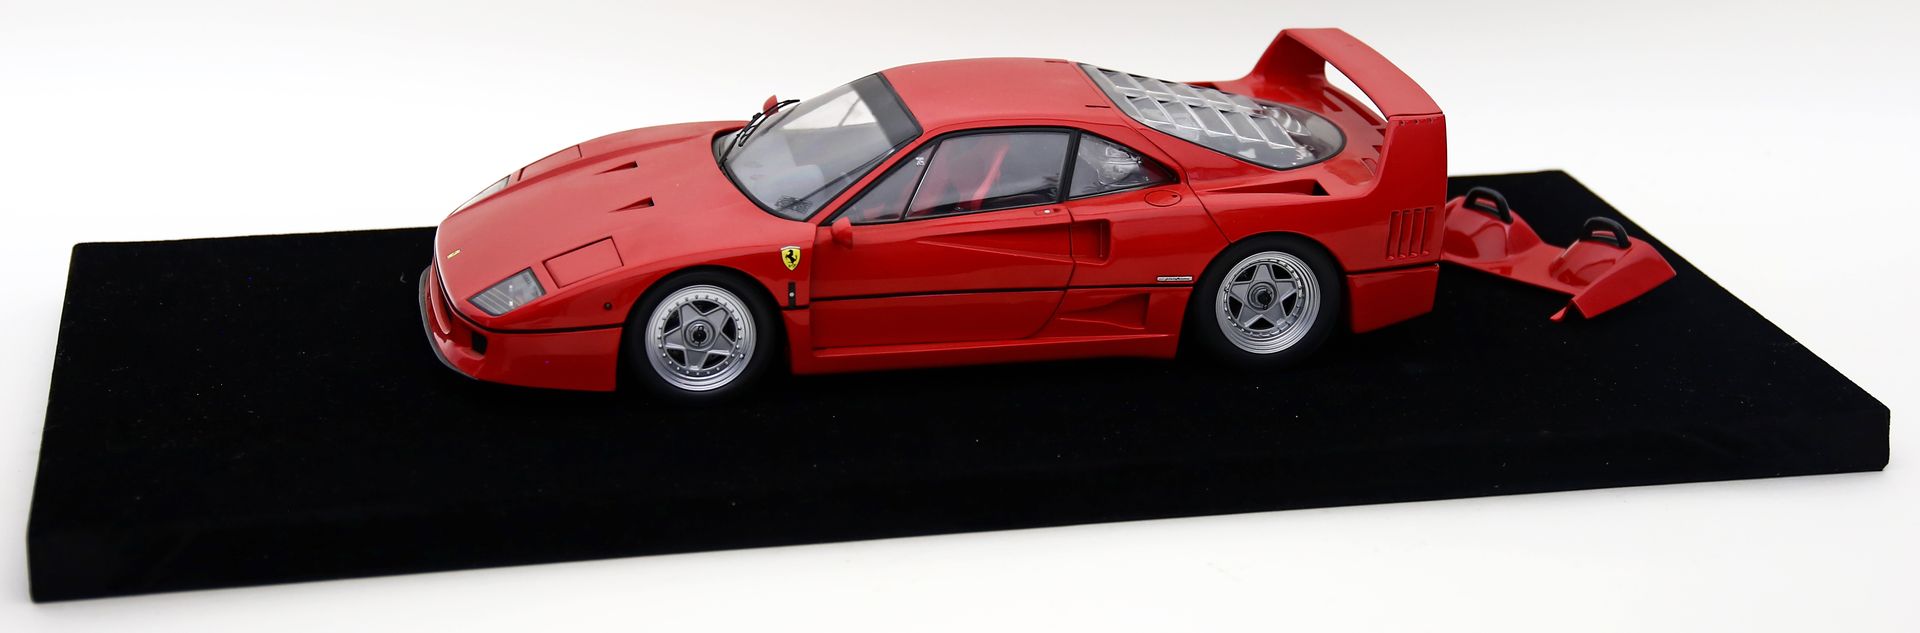 Modellauto "Sportwagen Ferrari", 1:12.